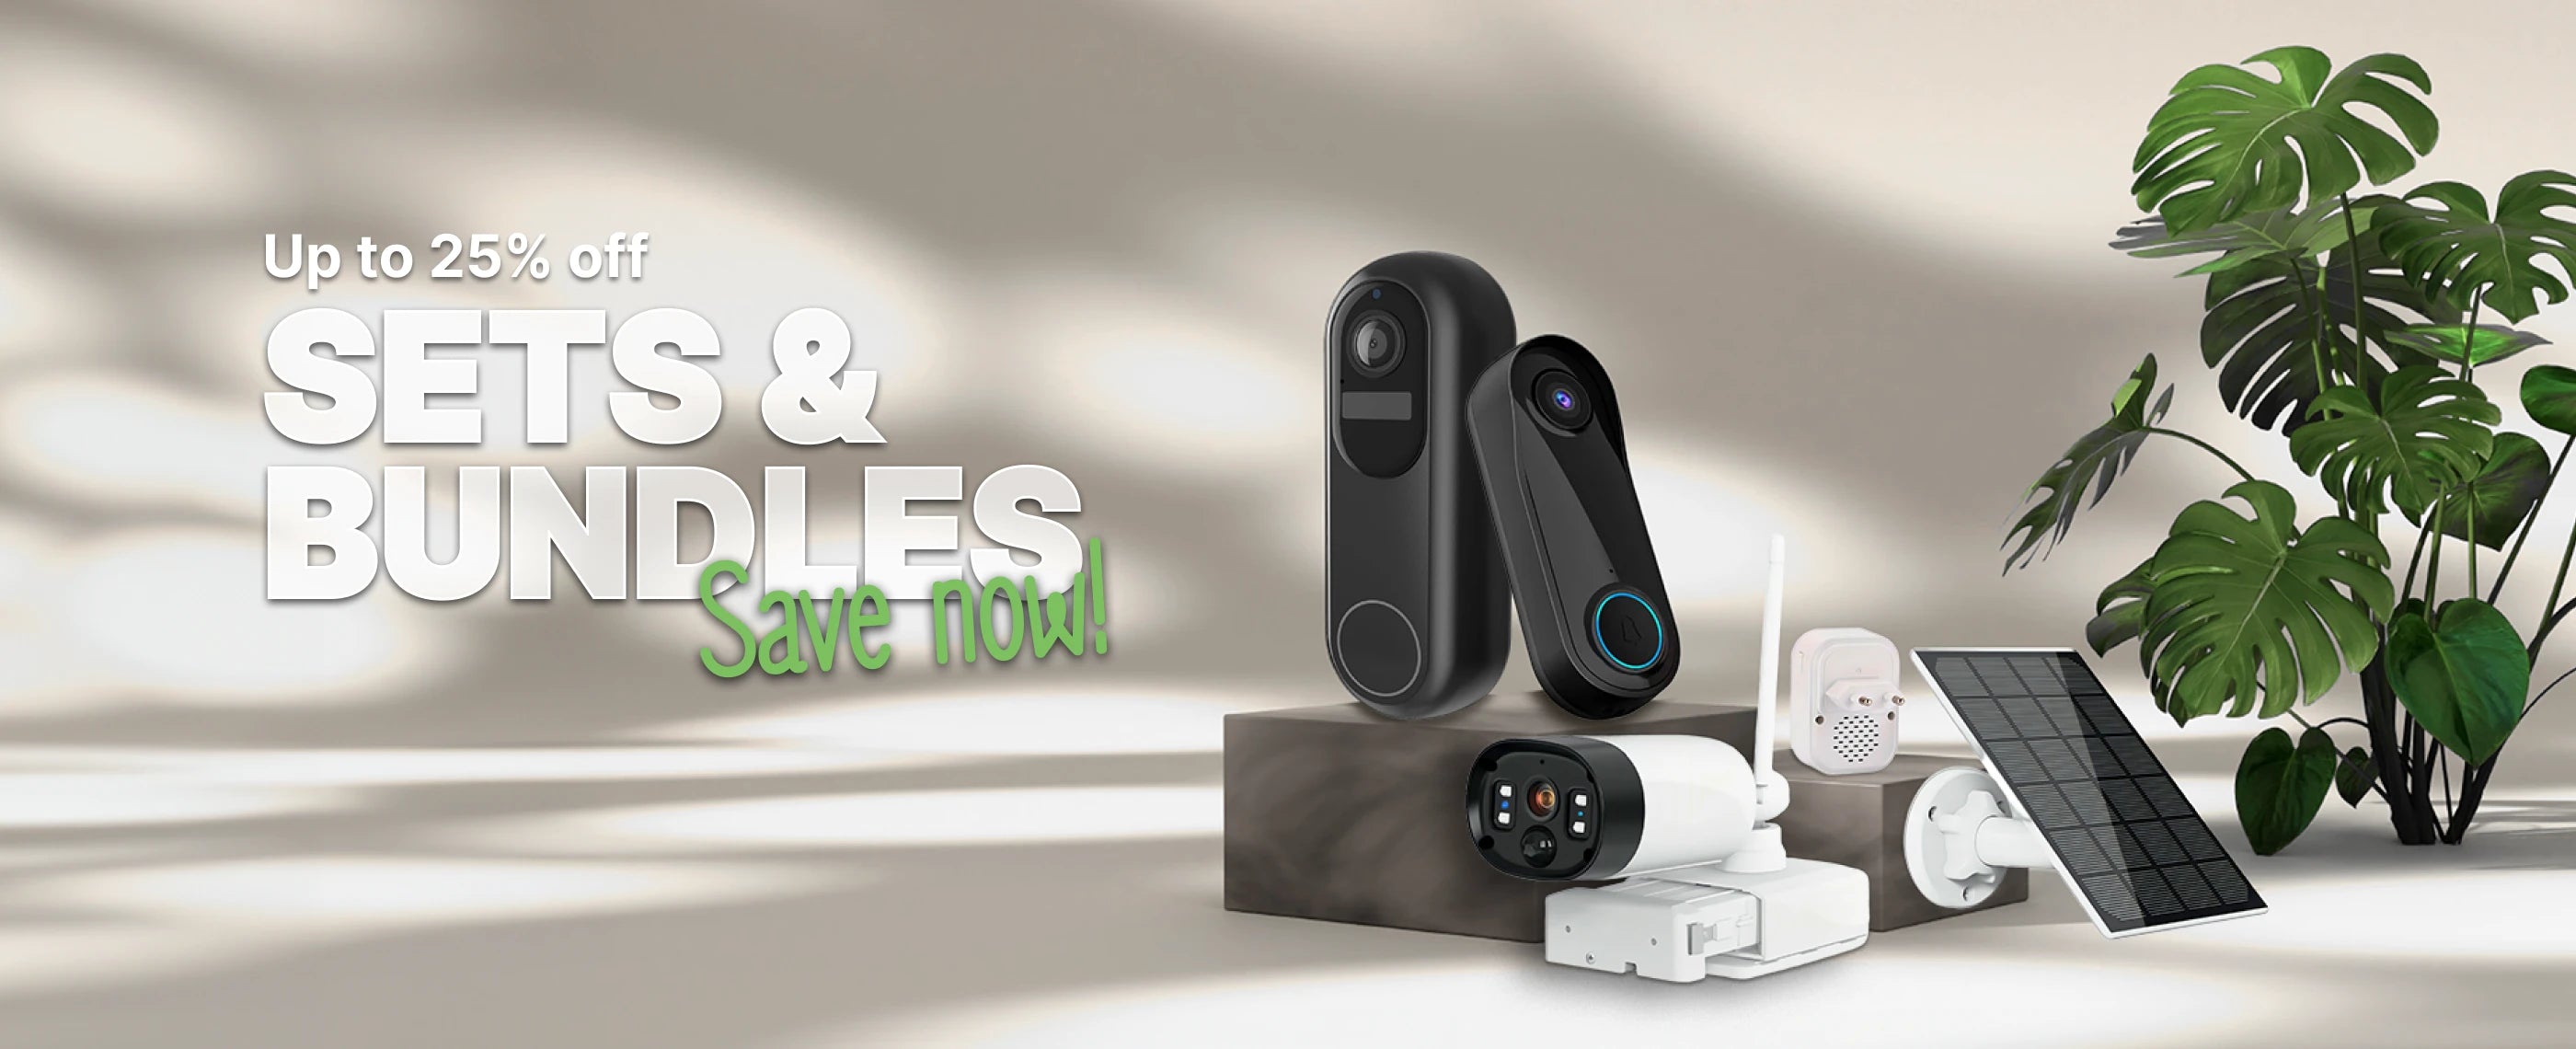 Video doorbell and surveillance camera bundles